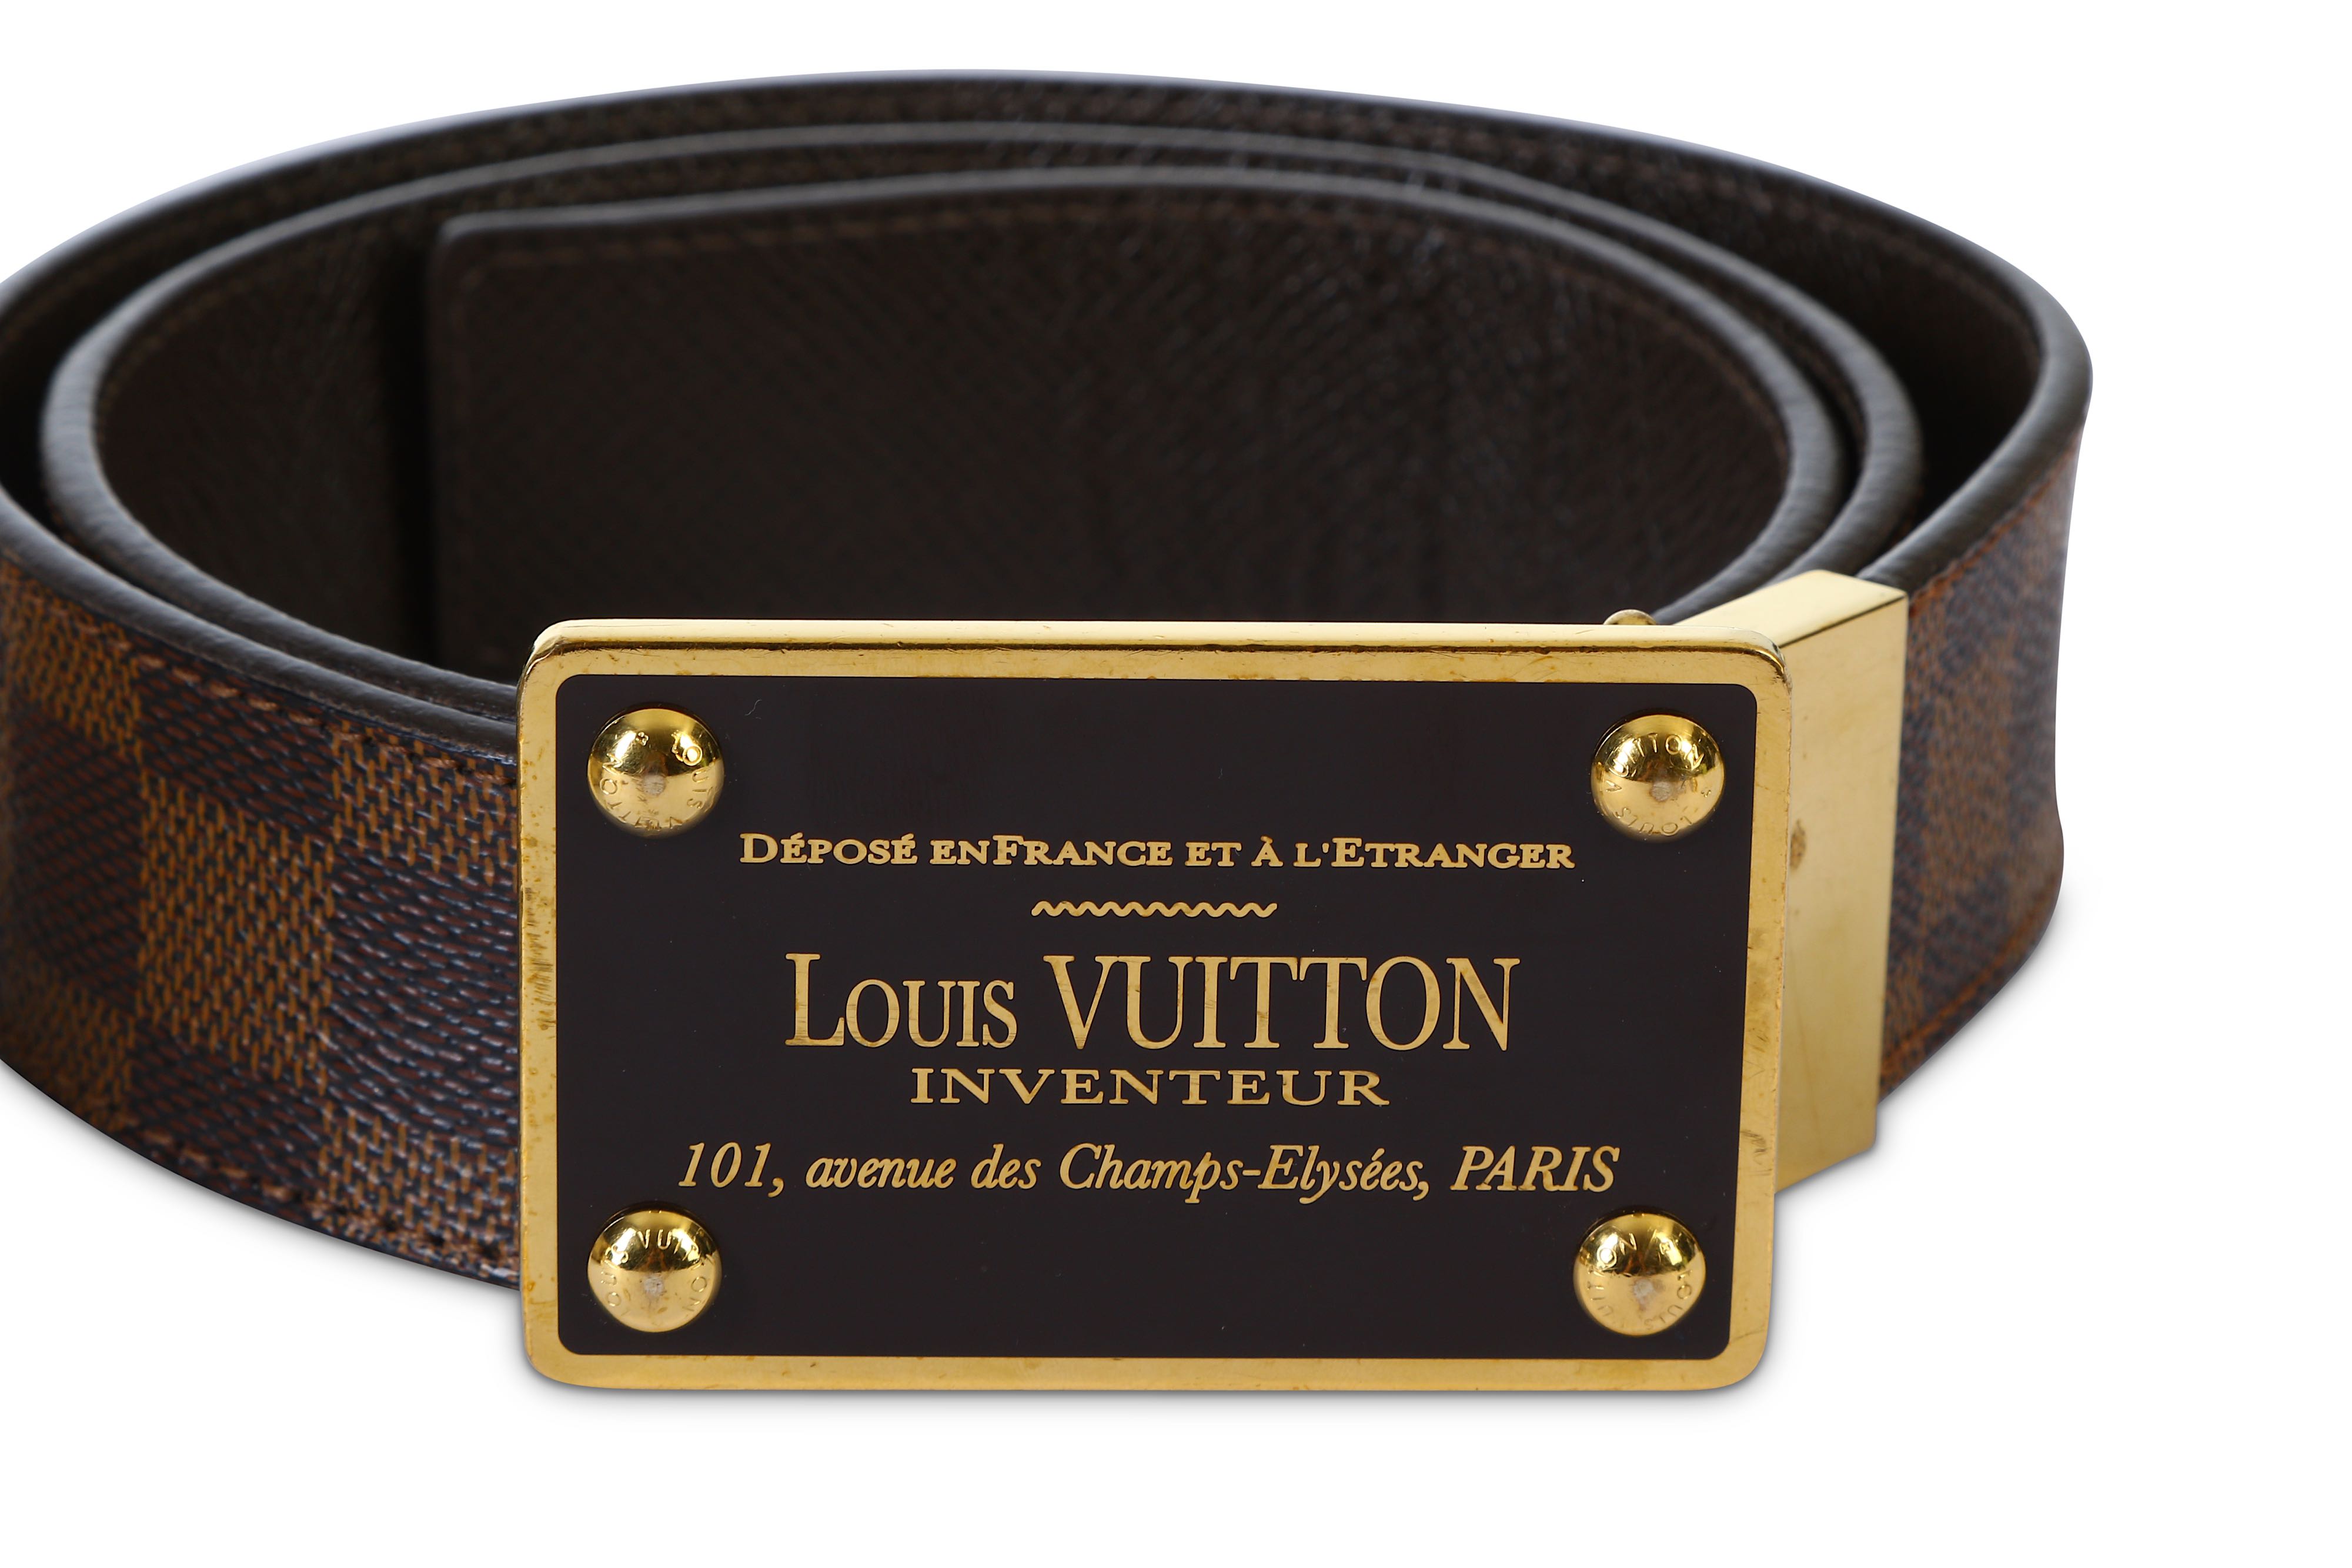 Lot 63 - Two Louis Vuitton Belts, c. 2011, one a